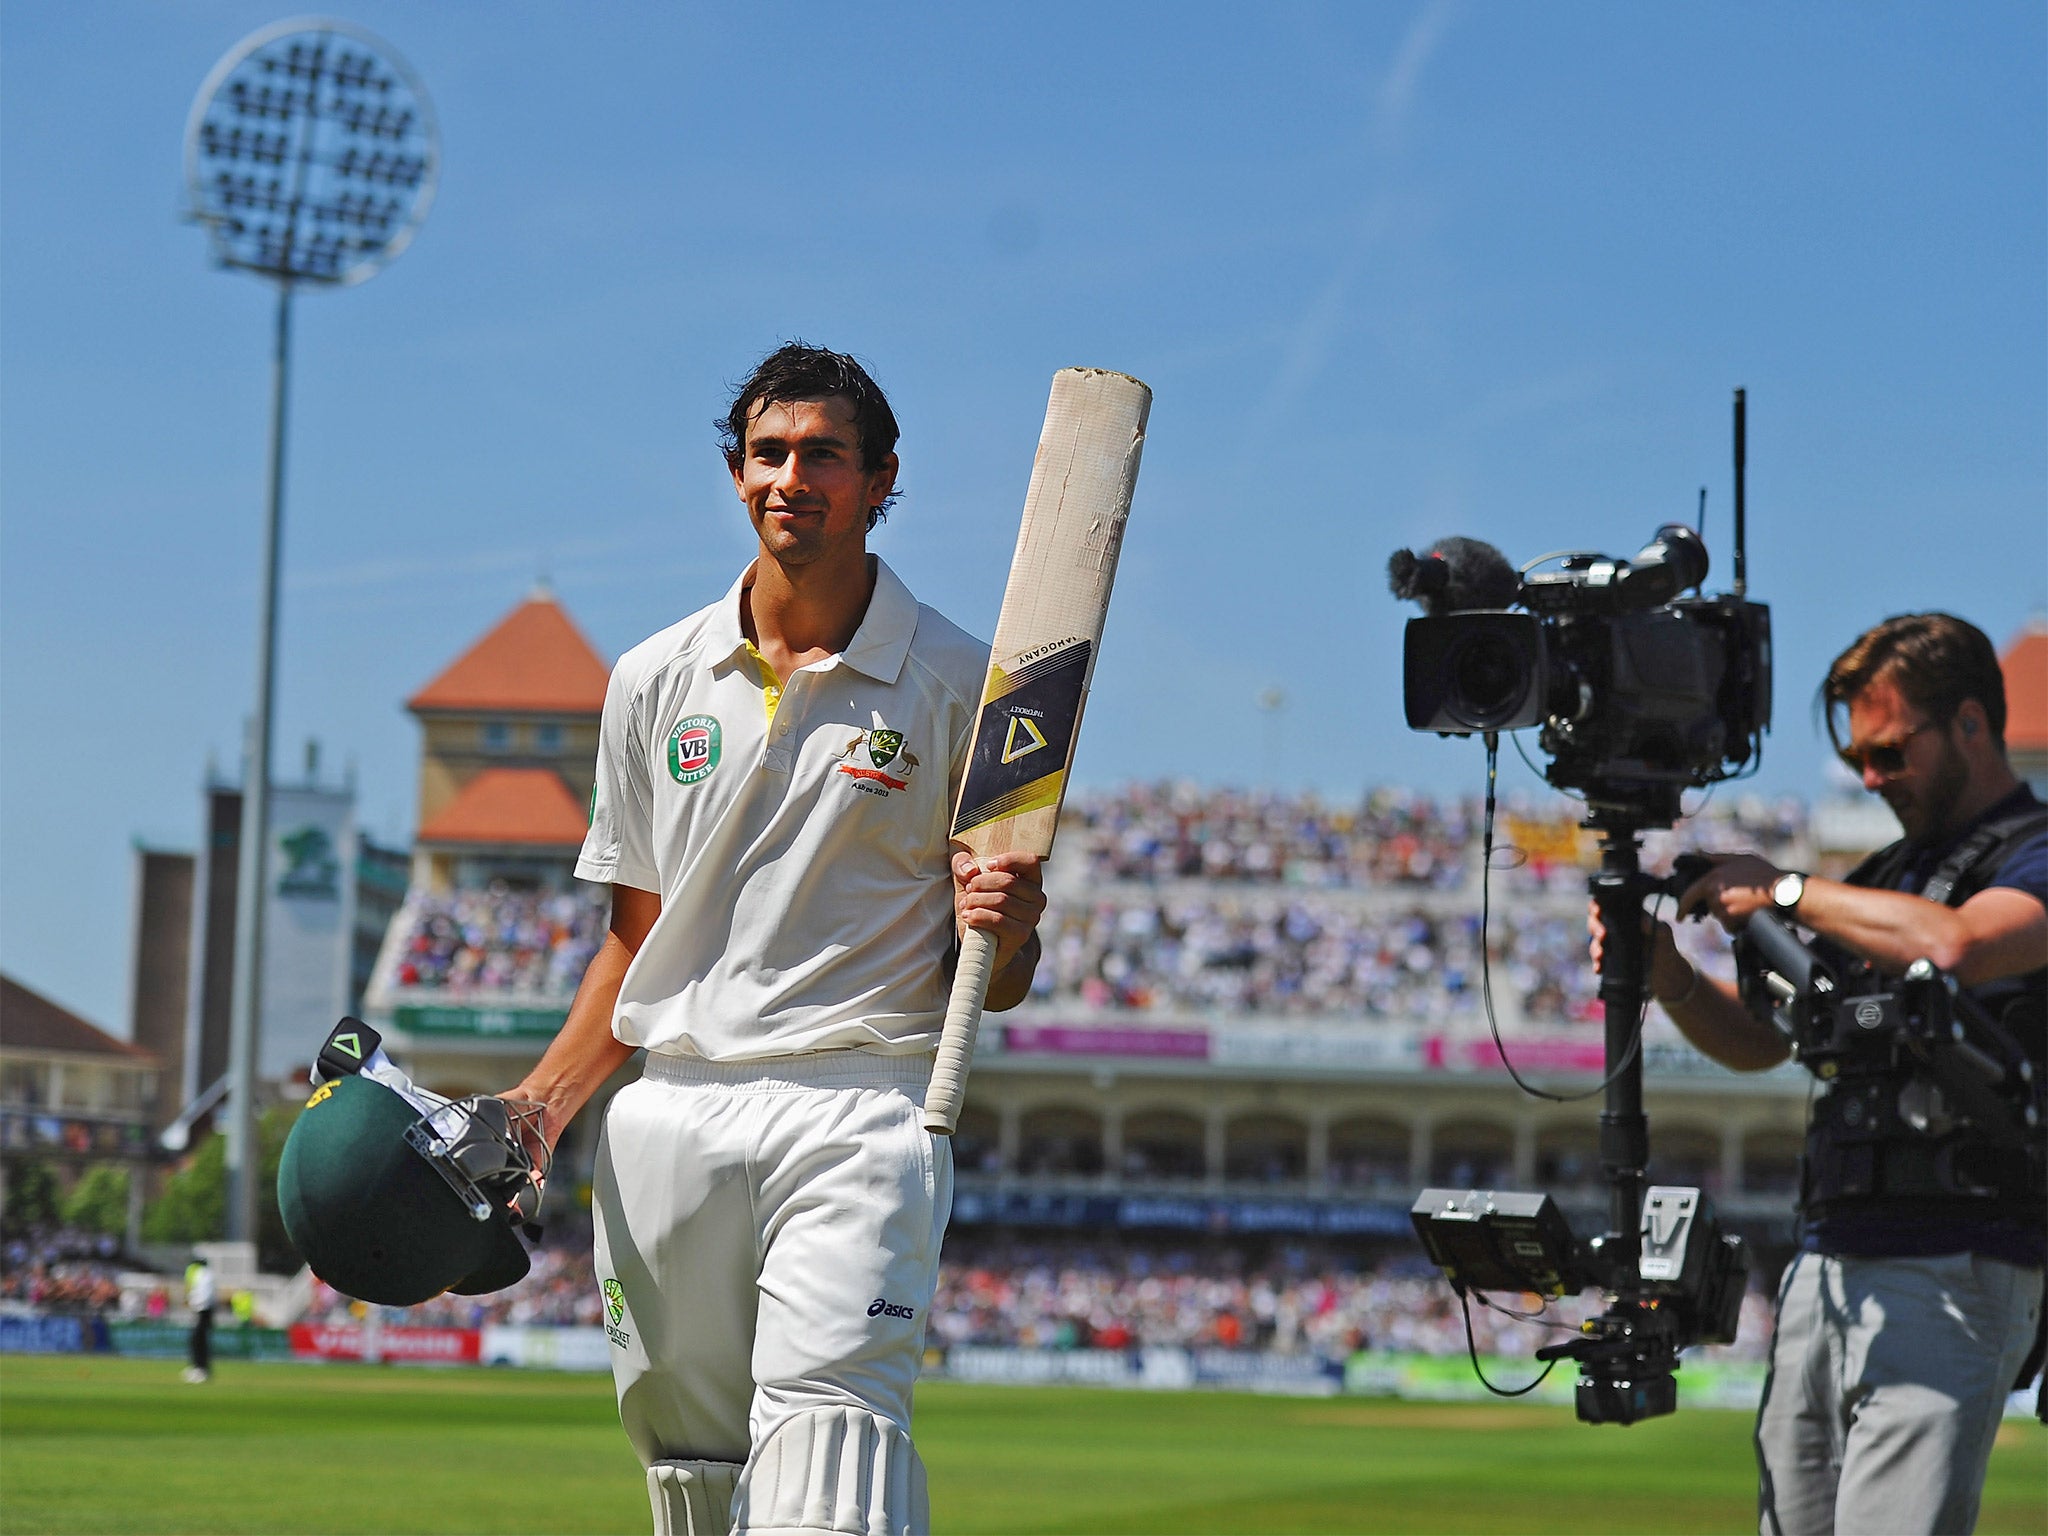 Ashton Agar after hitting 98 for Australia at Trent Bridge in the 2013 Ashes series